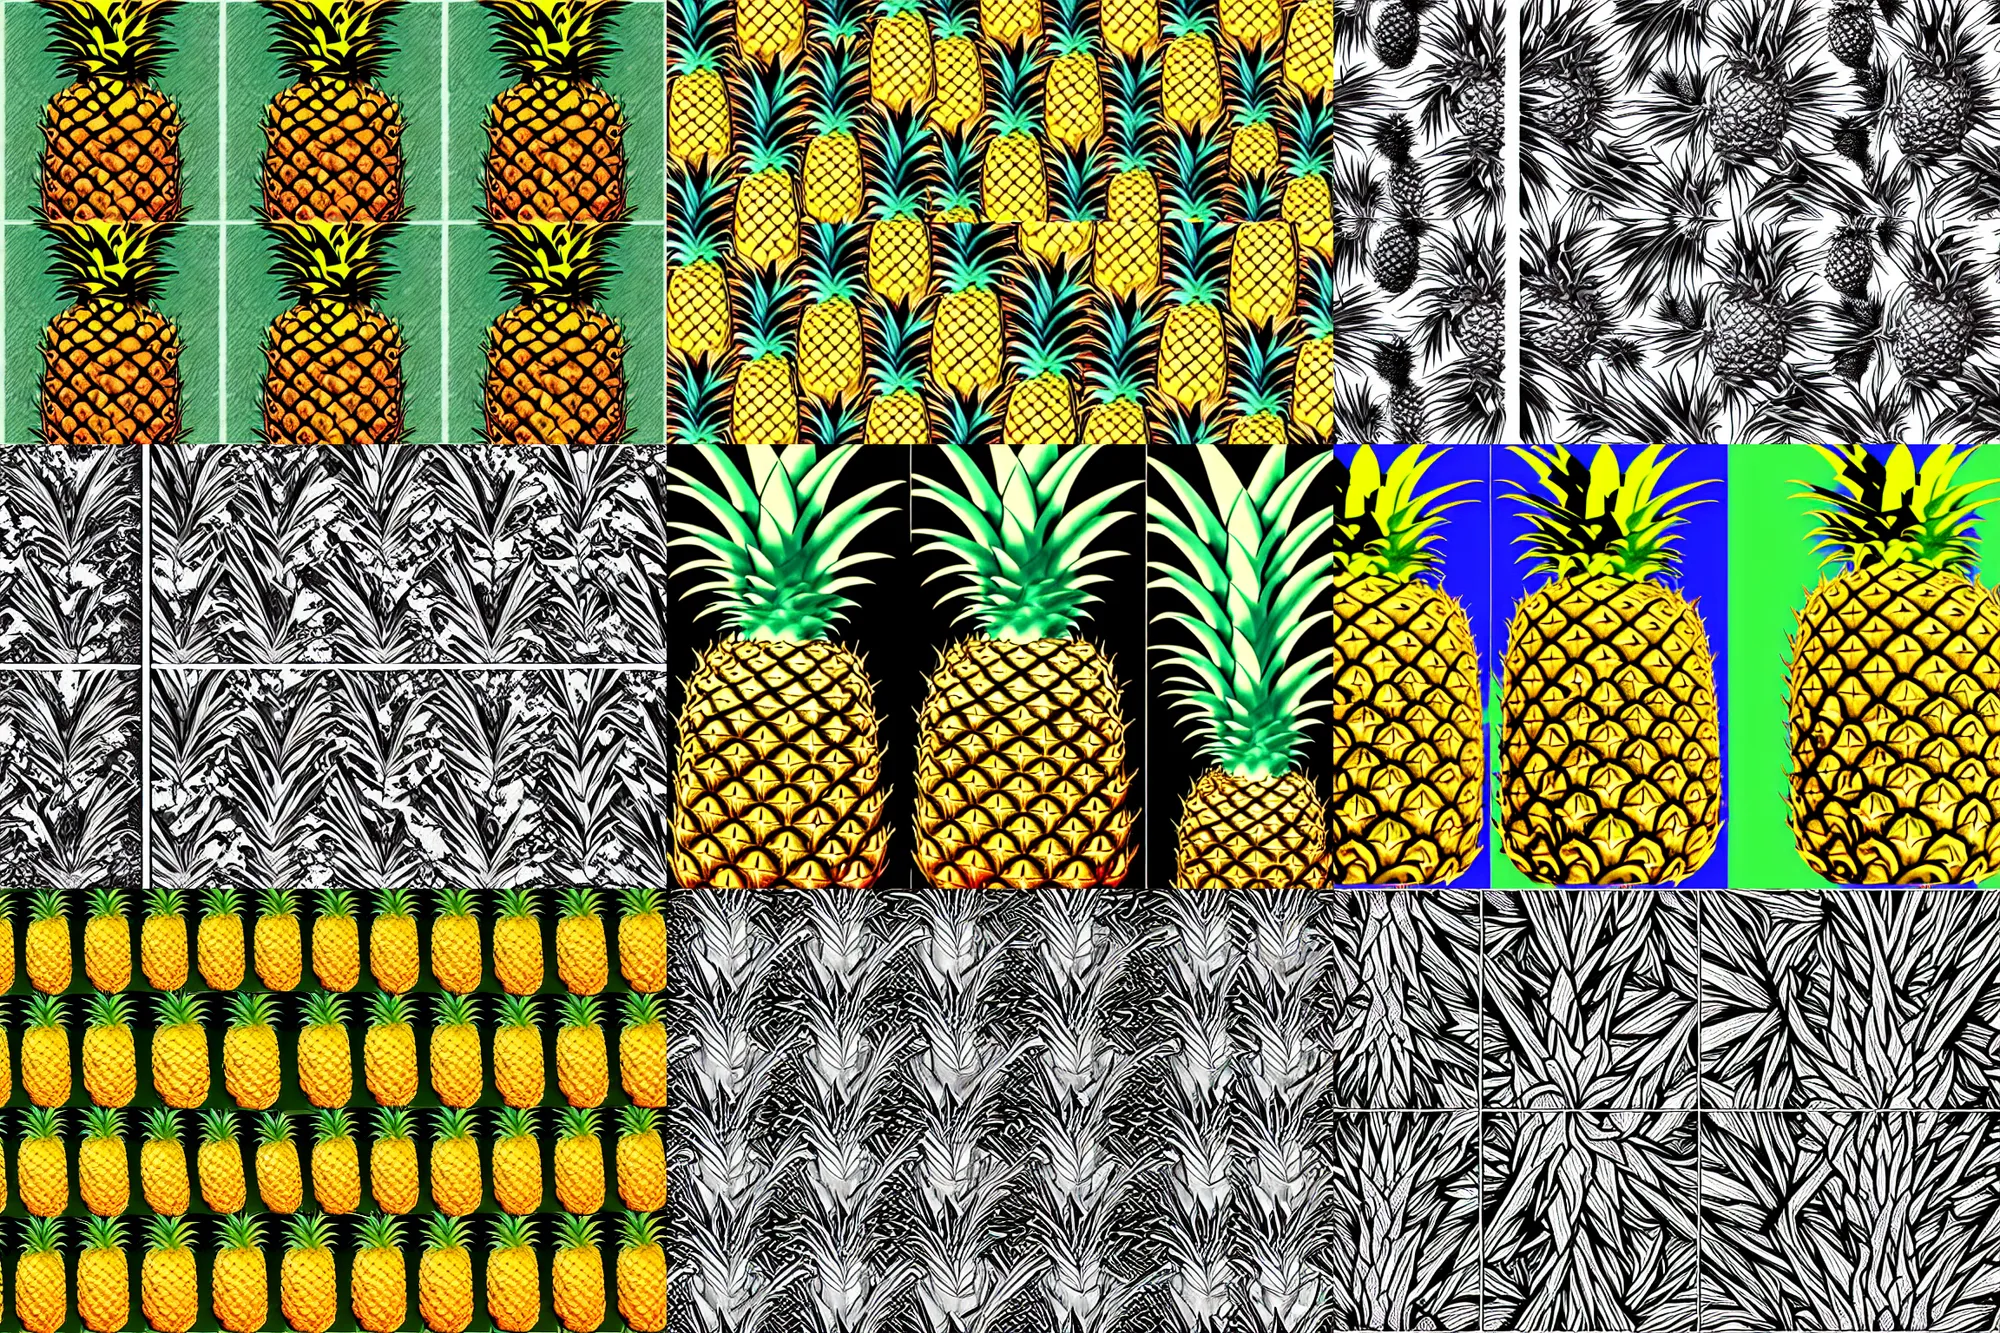 Prompt: pineapple, stereogram, side-by-side, digital artwork